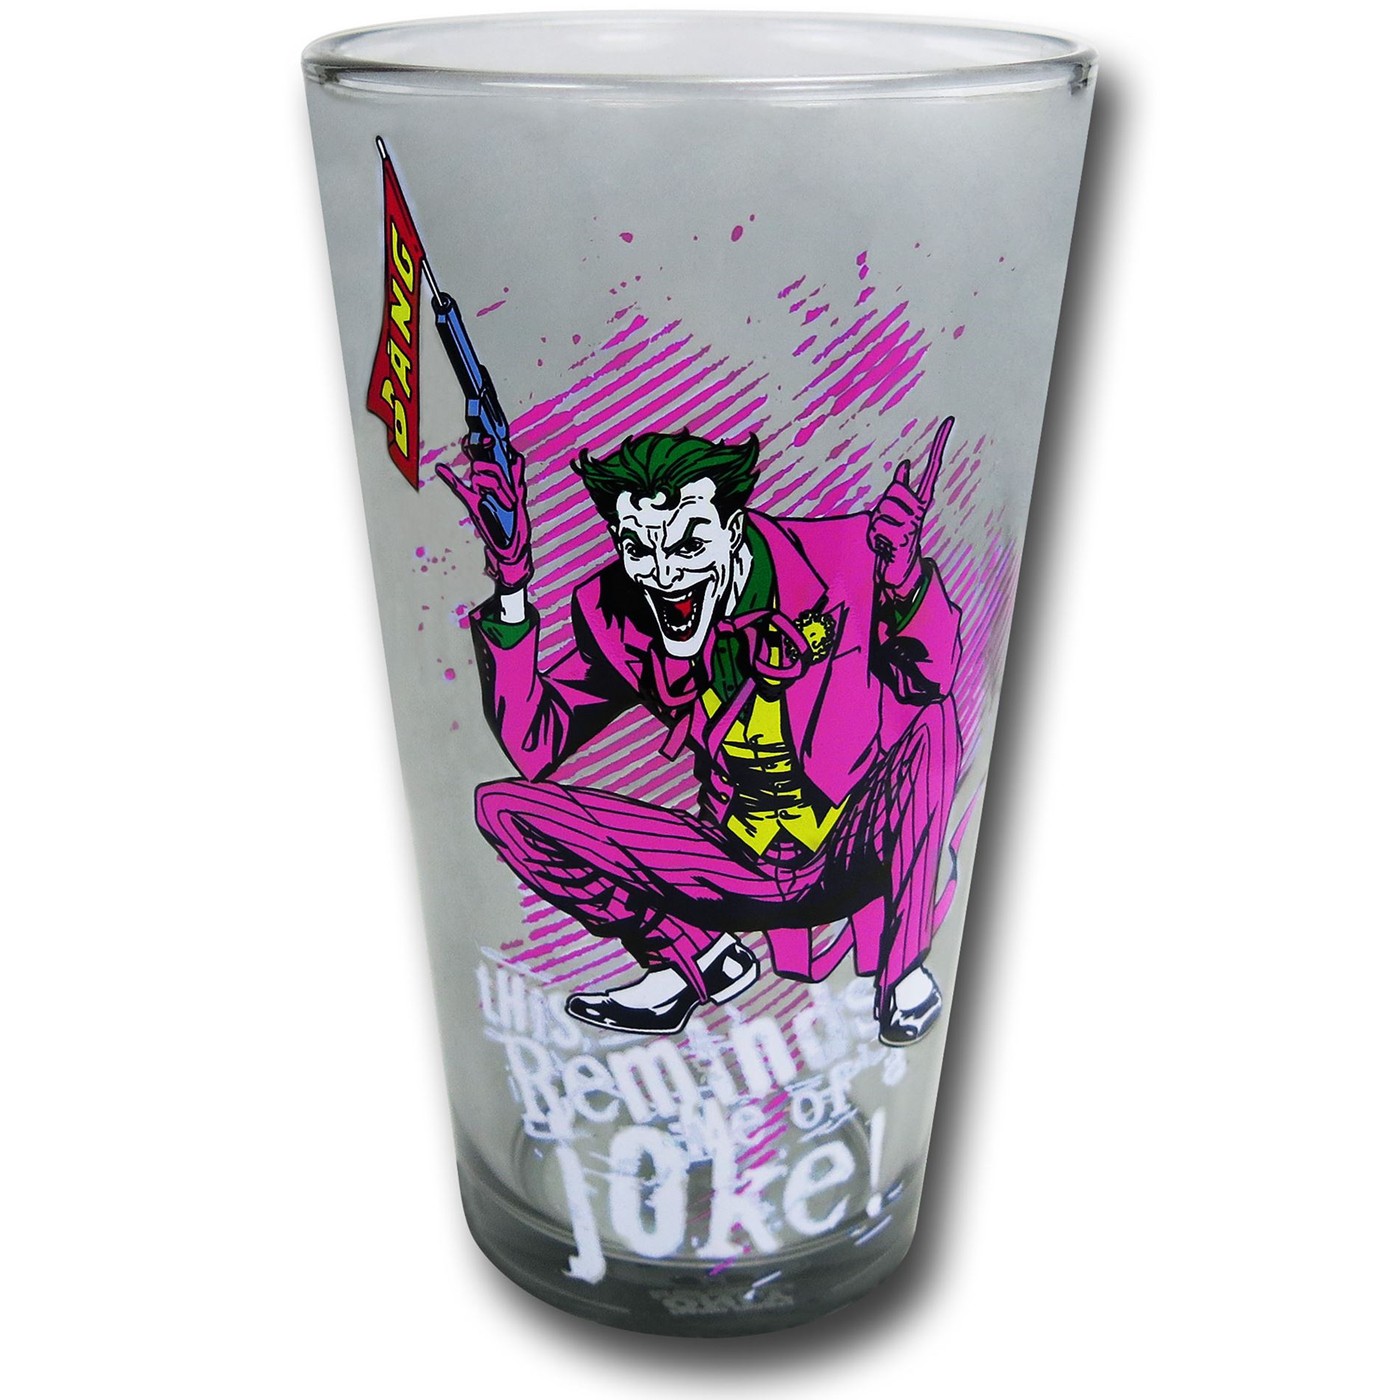 Joker and Harley 2pc Pint Glass Set